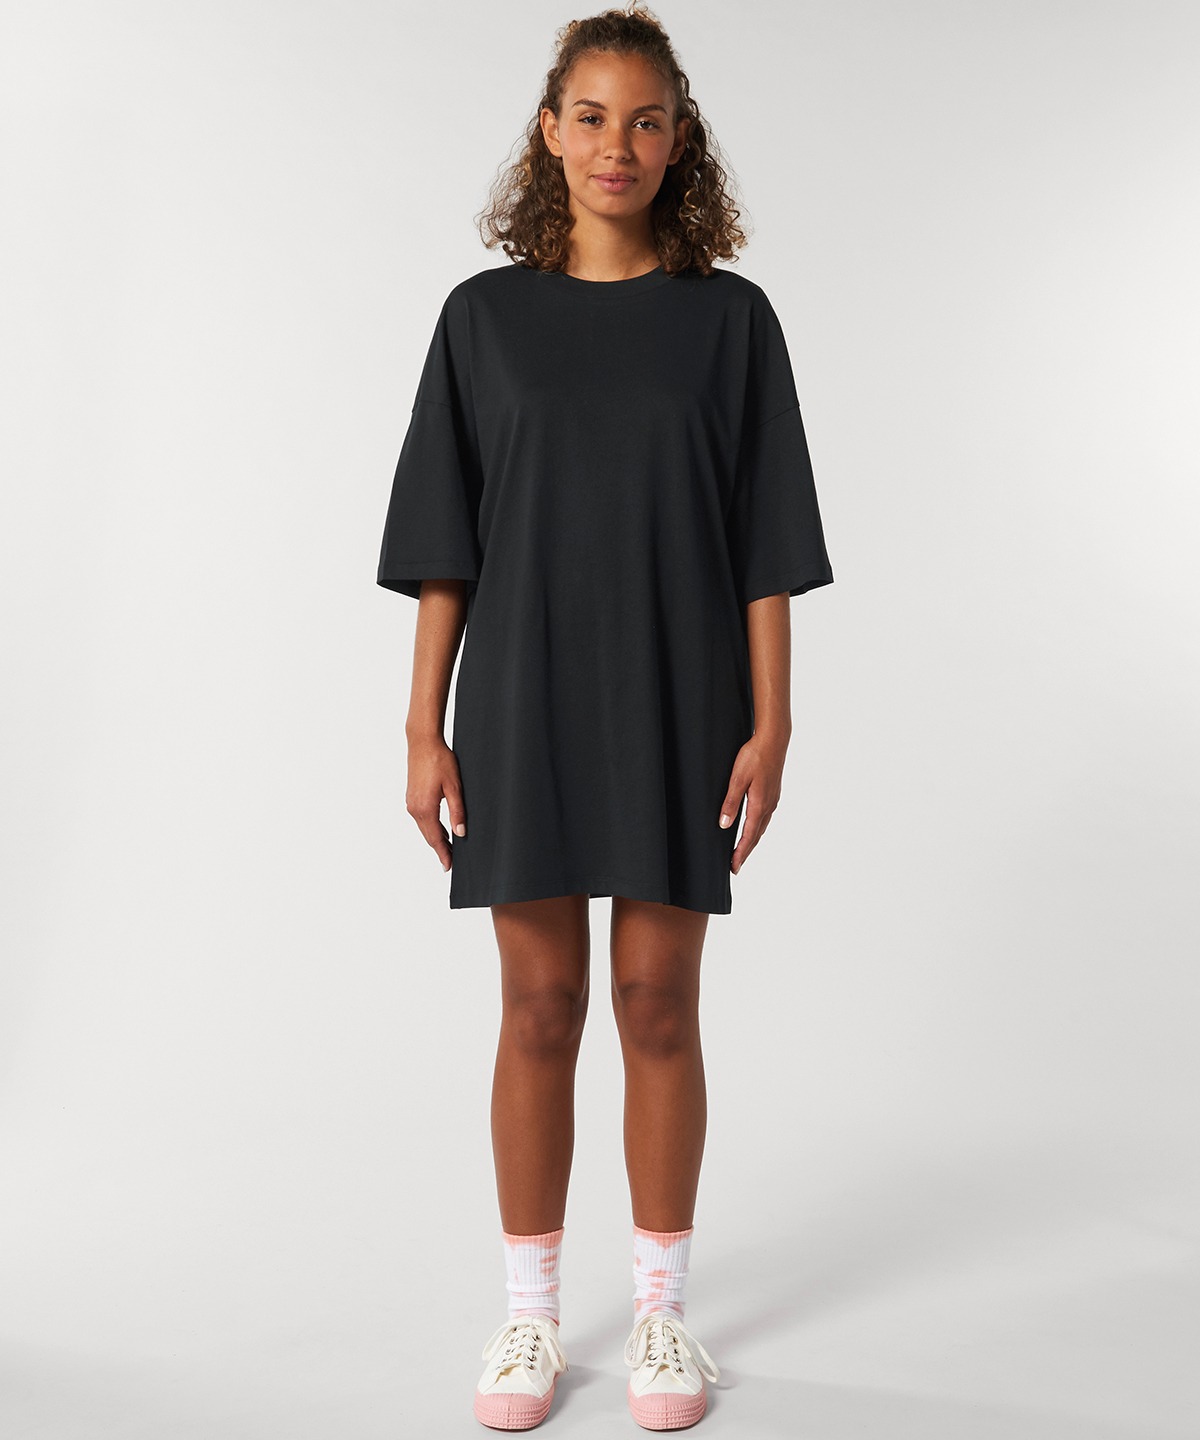 Stella Twister, The Women’s Oversized T-Shirt Dress